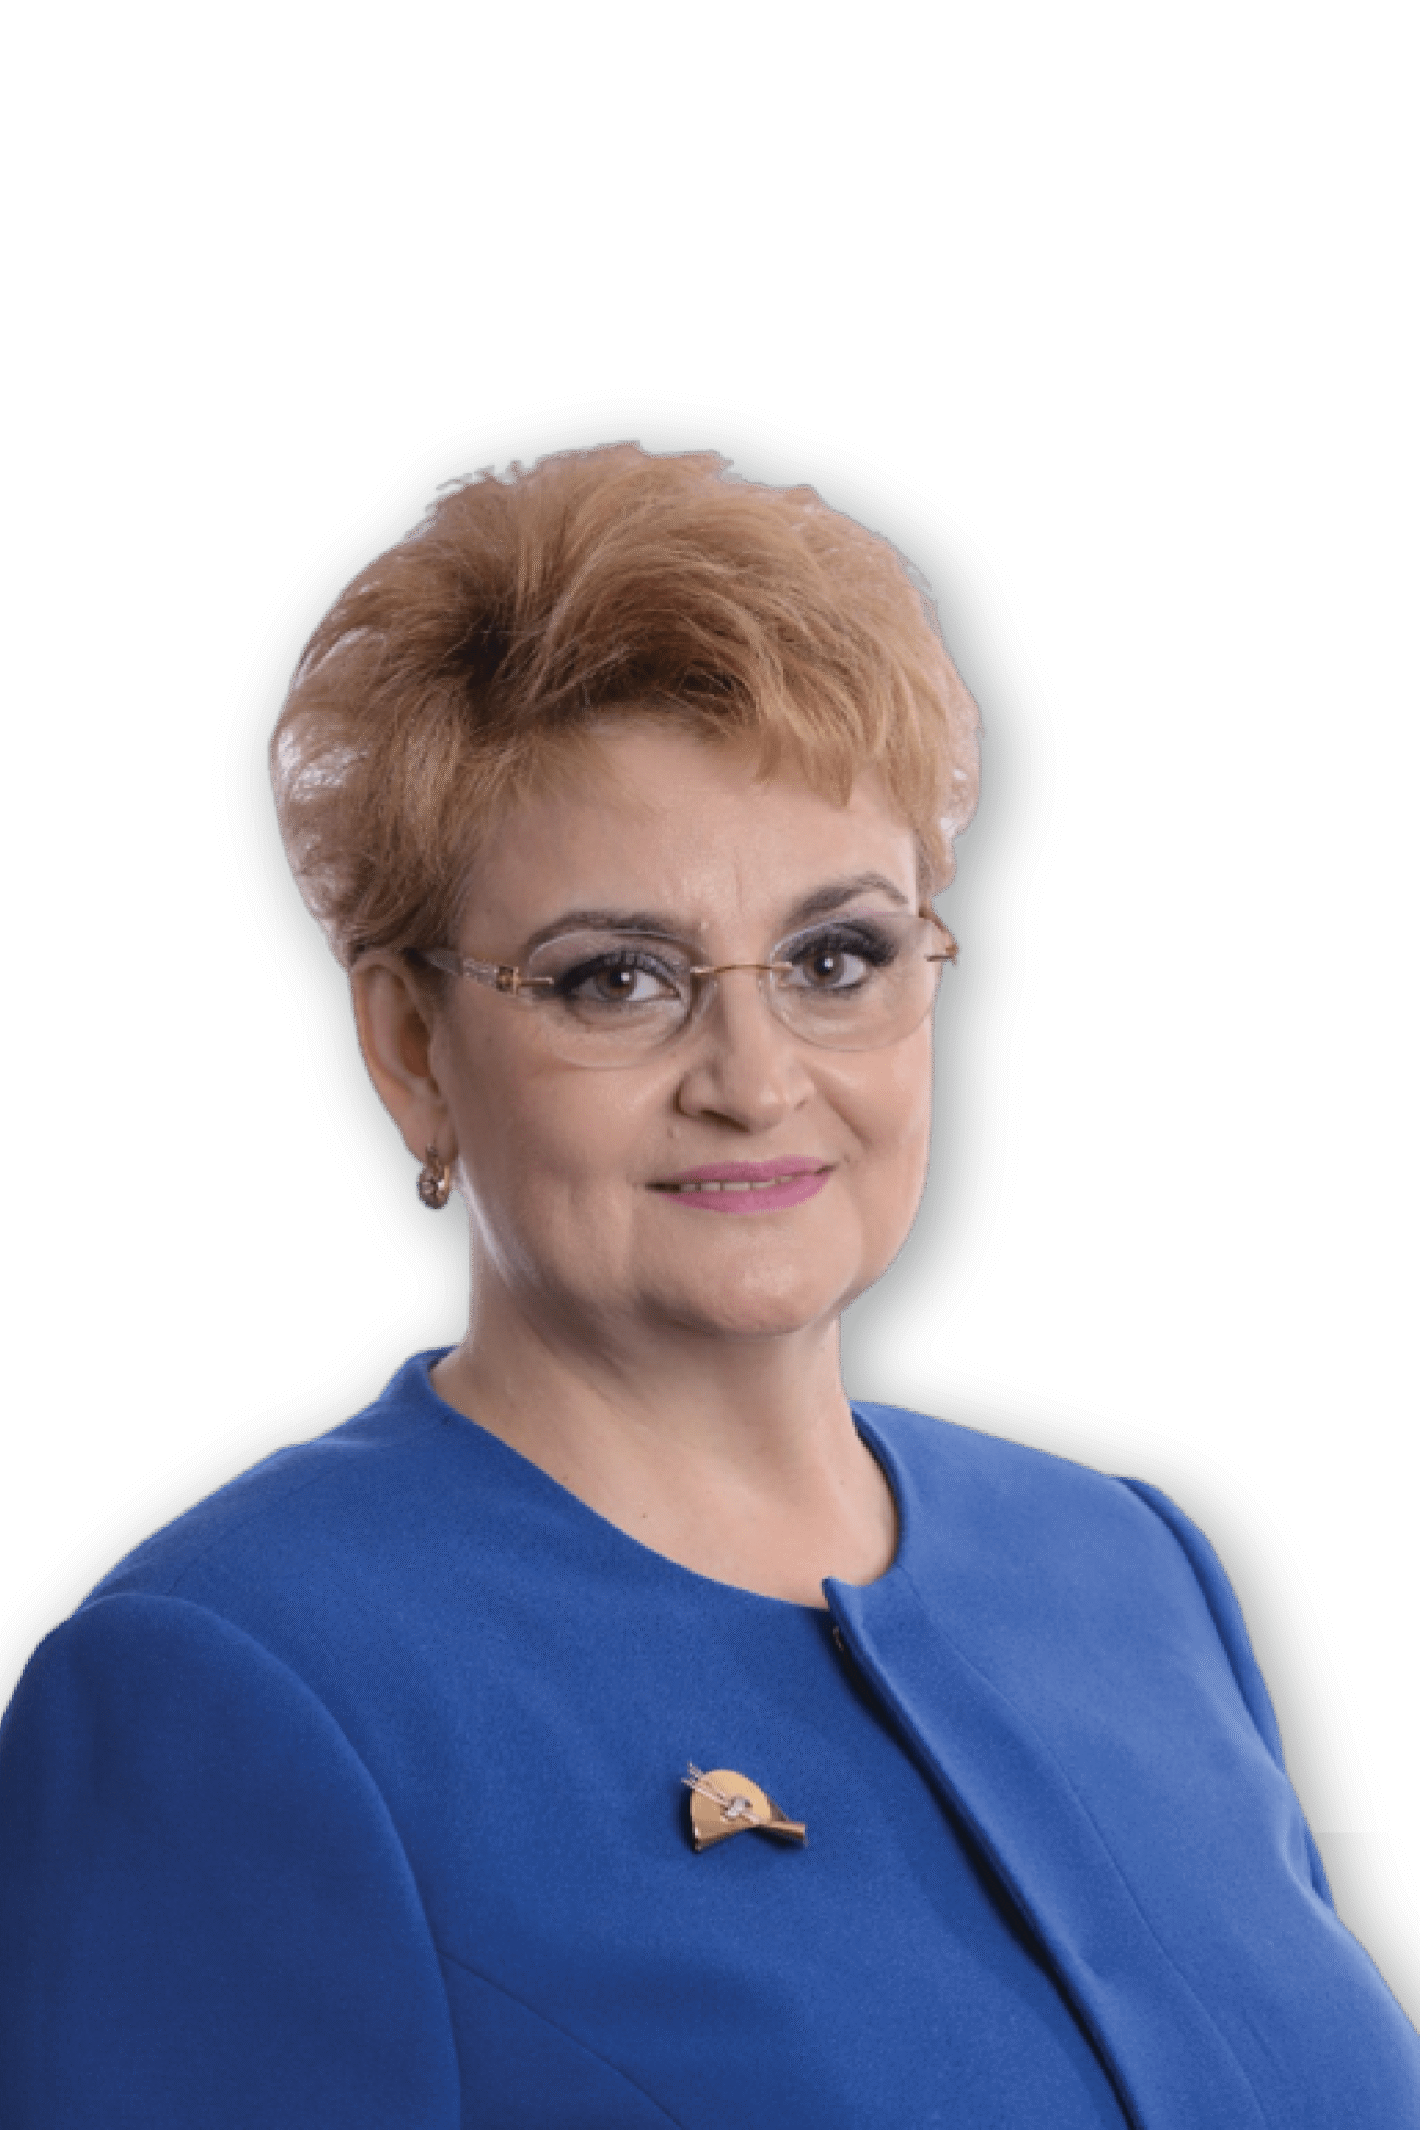 Grațiela Gavrilescu